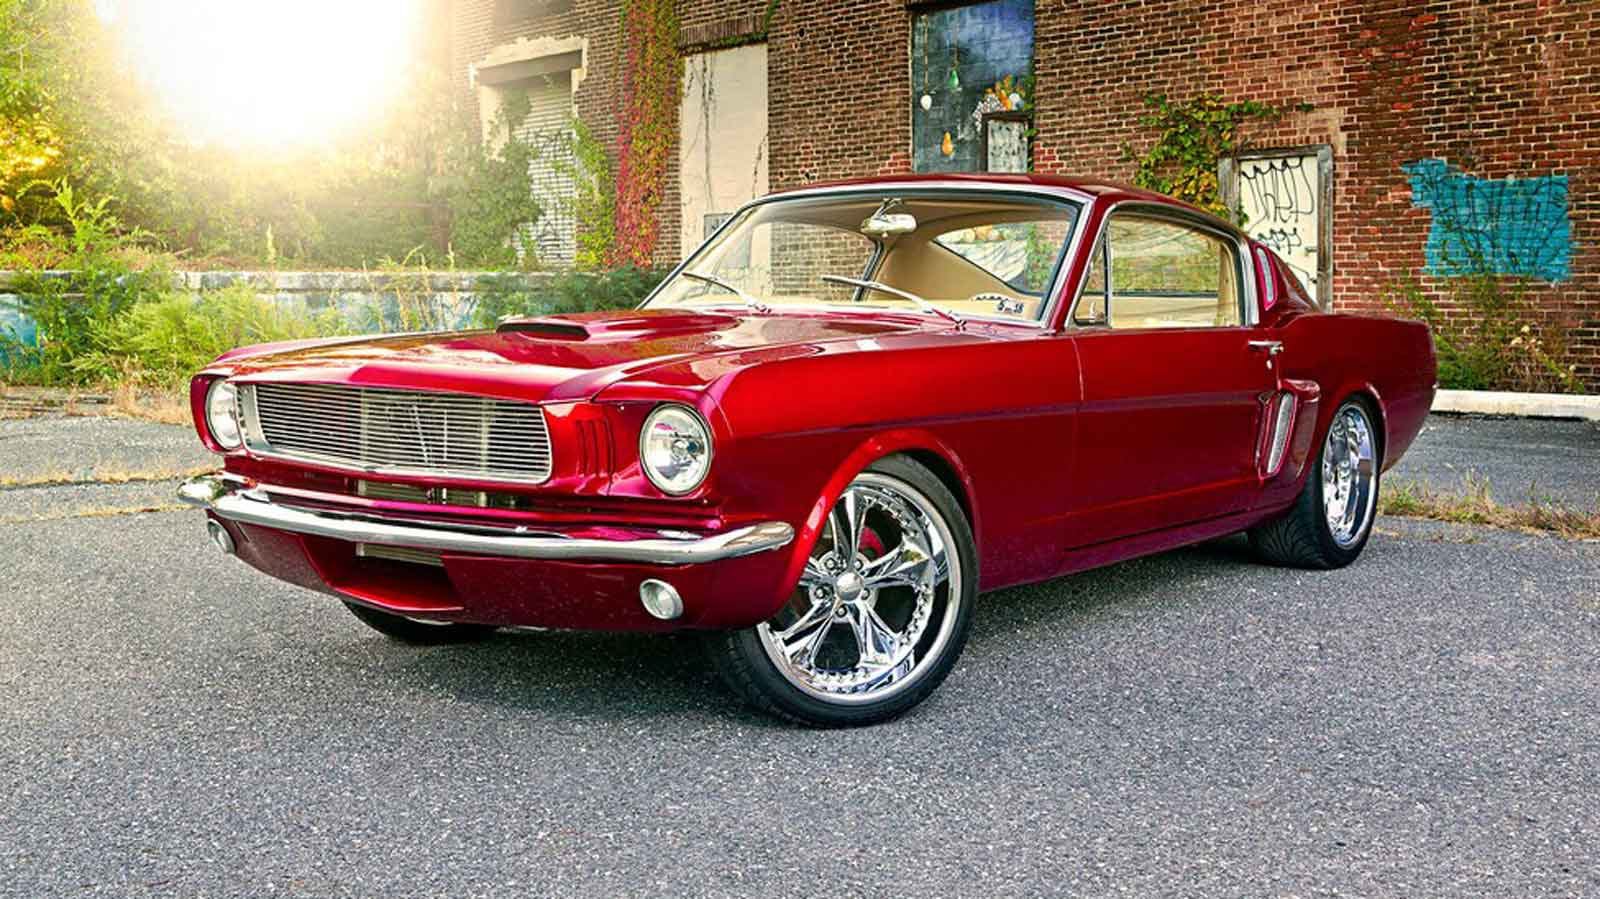 1966 Mustang Fastback - Sue Pellegrino